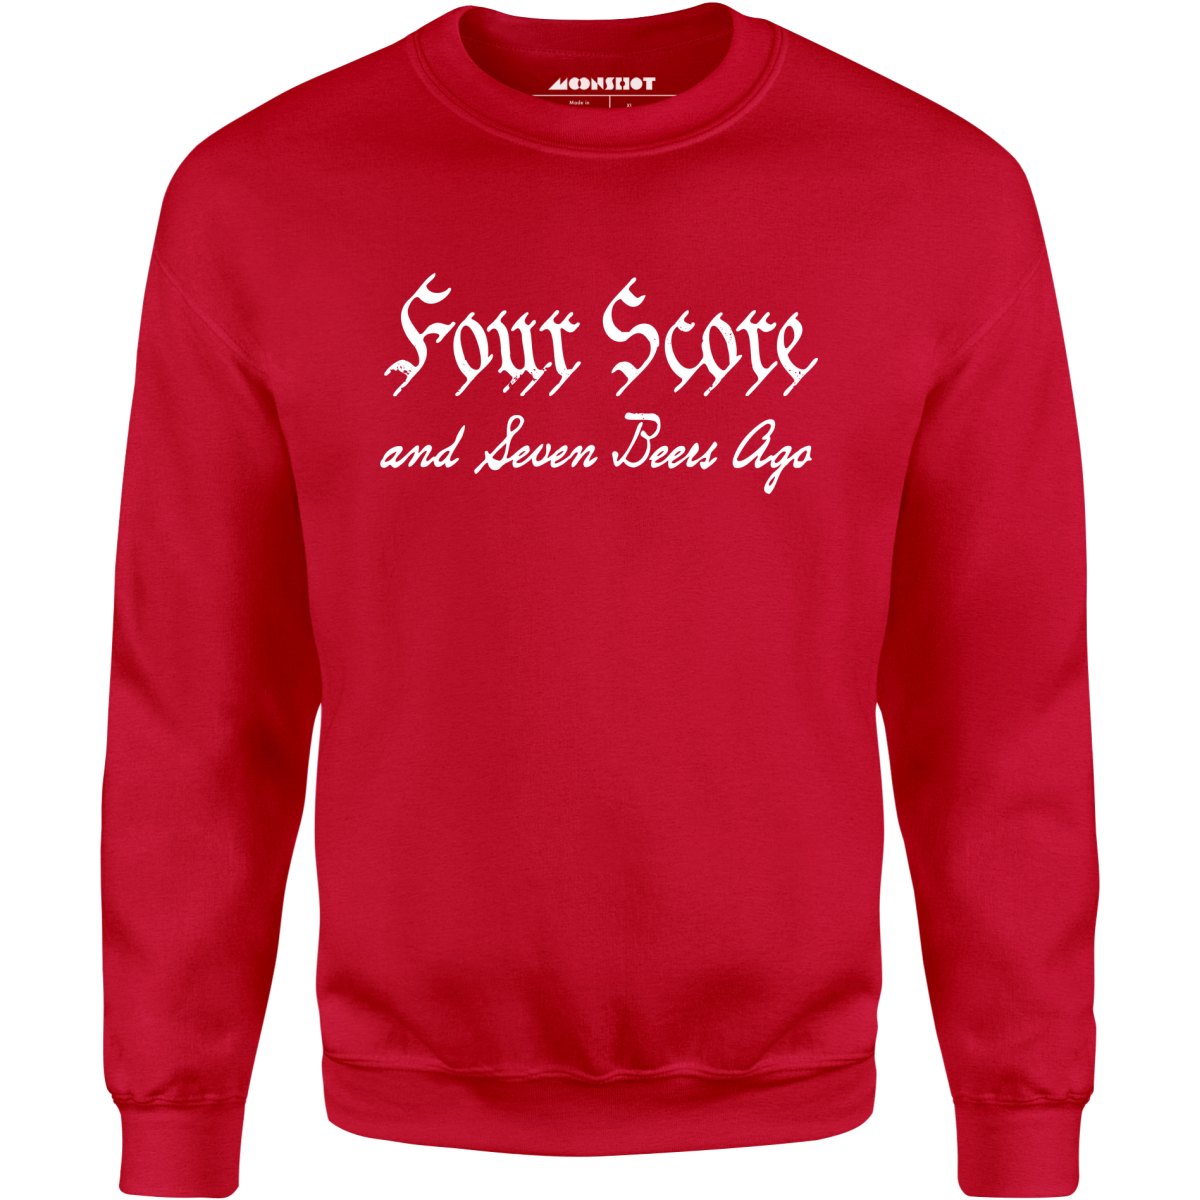 Four Score and Seven Beers Ago - Unisex Sweatshirt